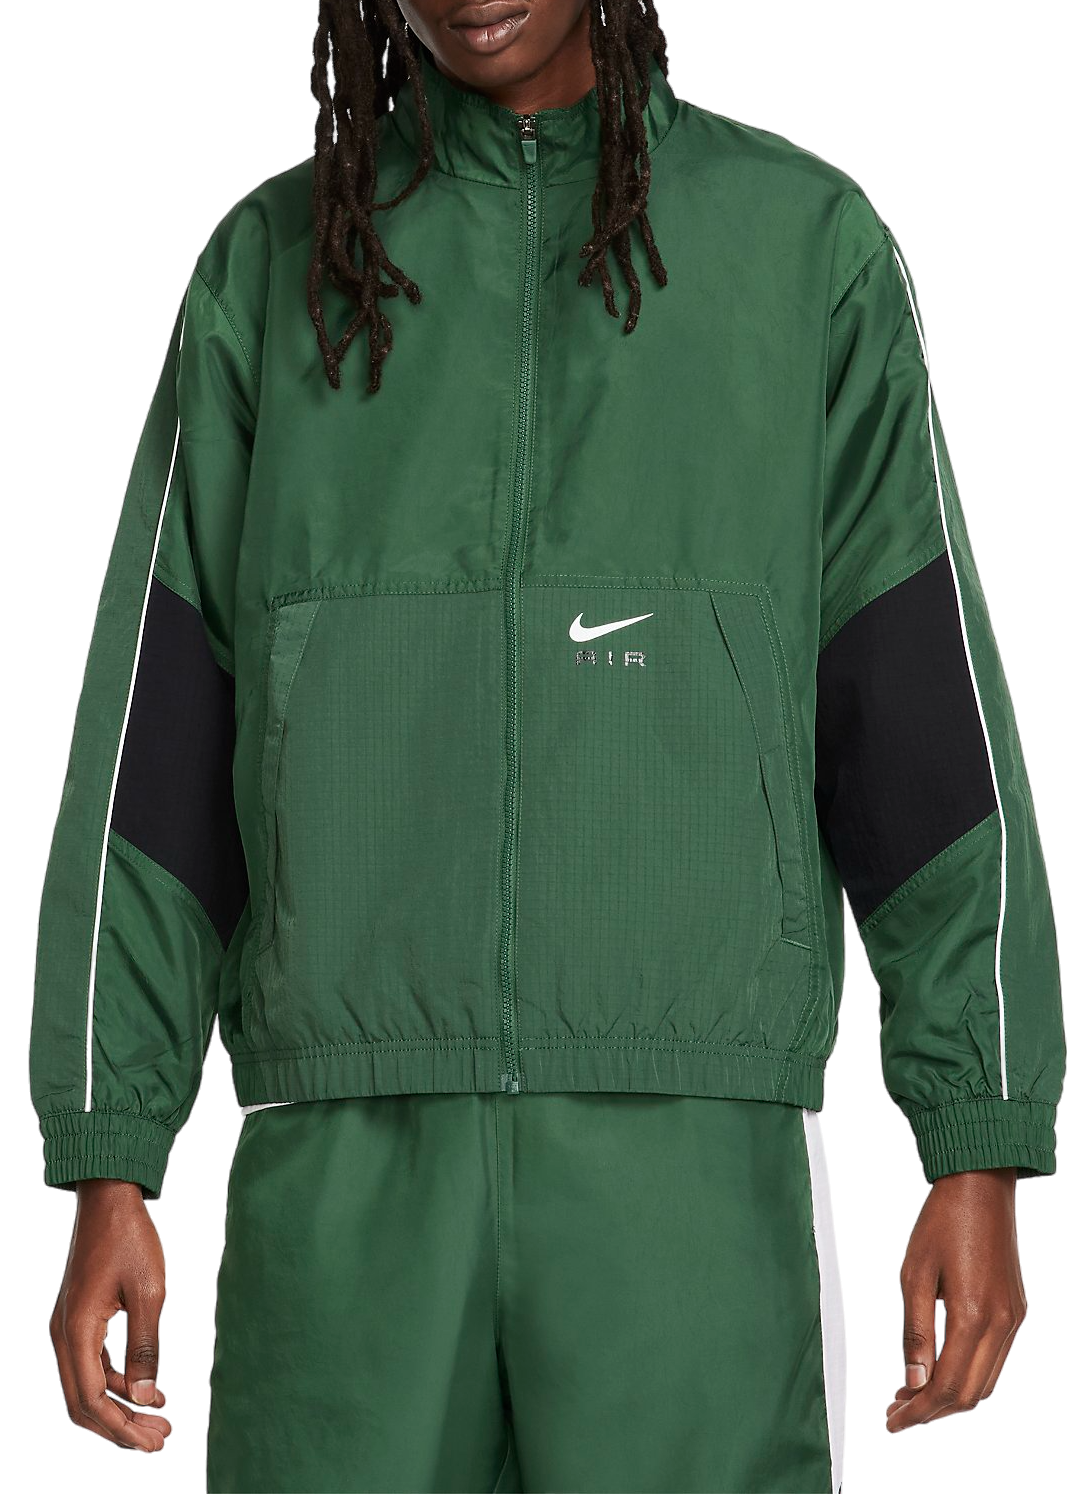 Jacket Nike M NSW SW AIR TRACKTOP